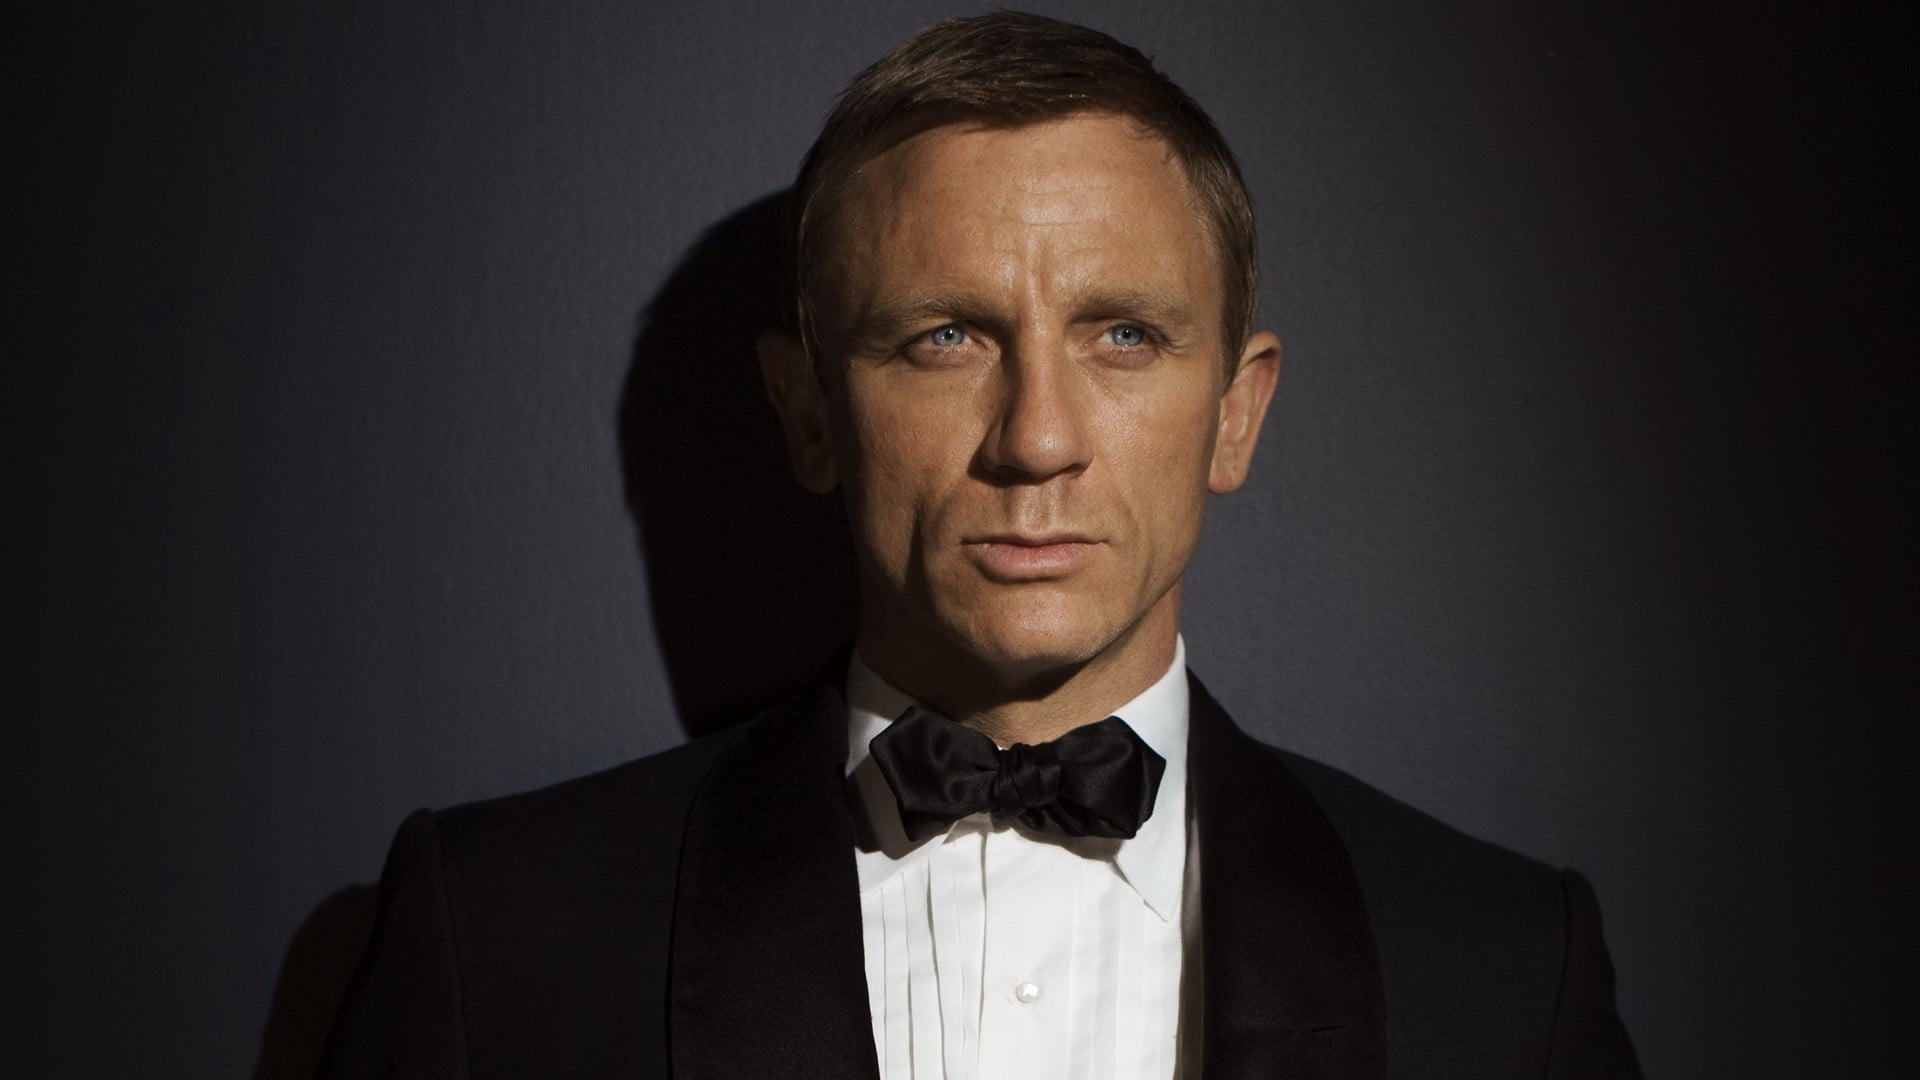 James Bond, James Bond, Daniel Craig, actor, tuxedo